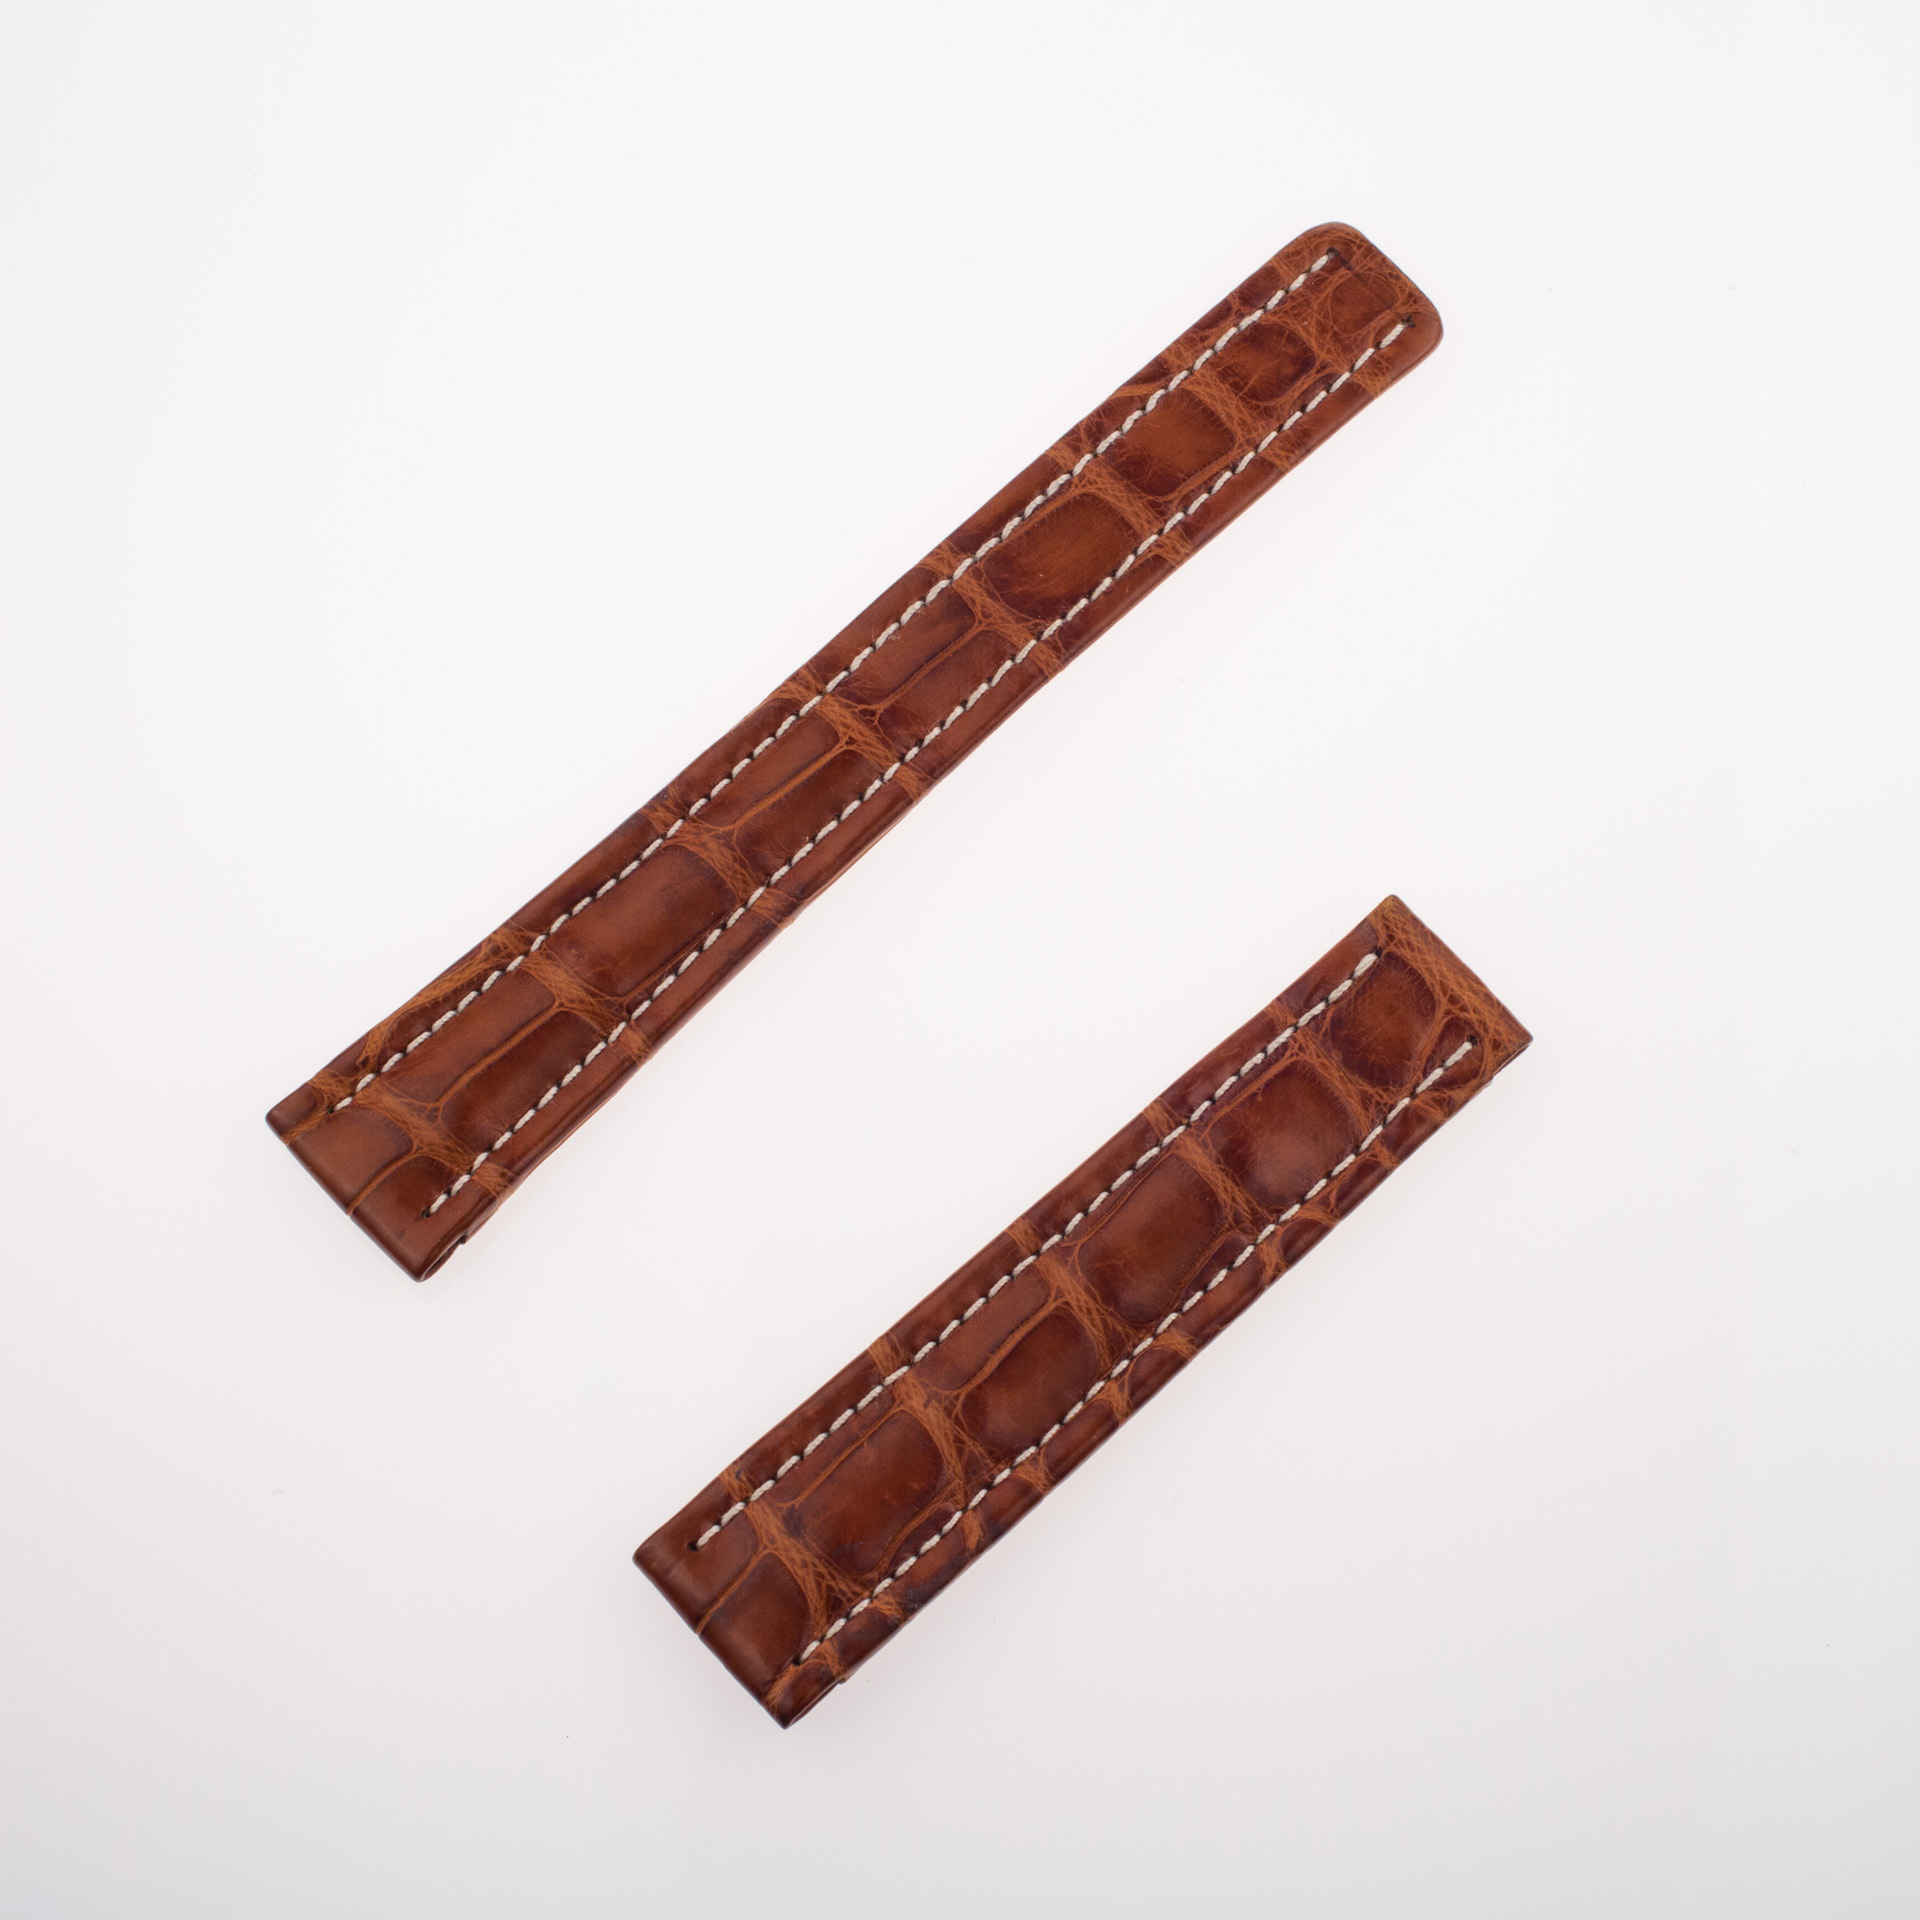 Breitling brown alligator strap with white stitches (18mm x 16mm)